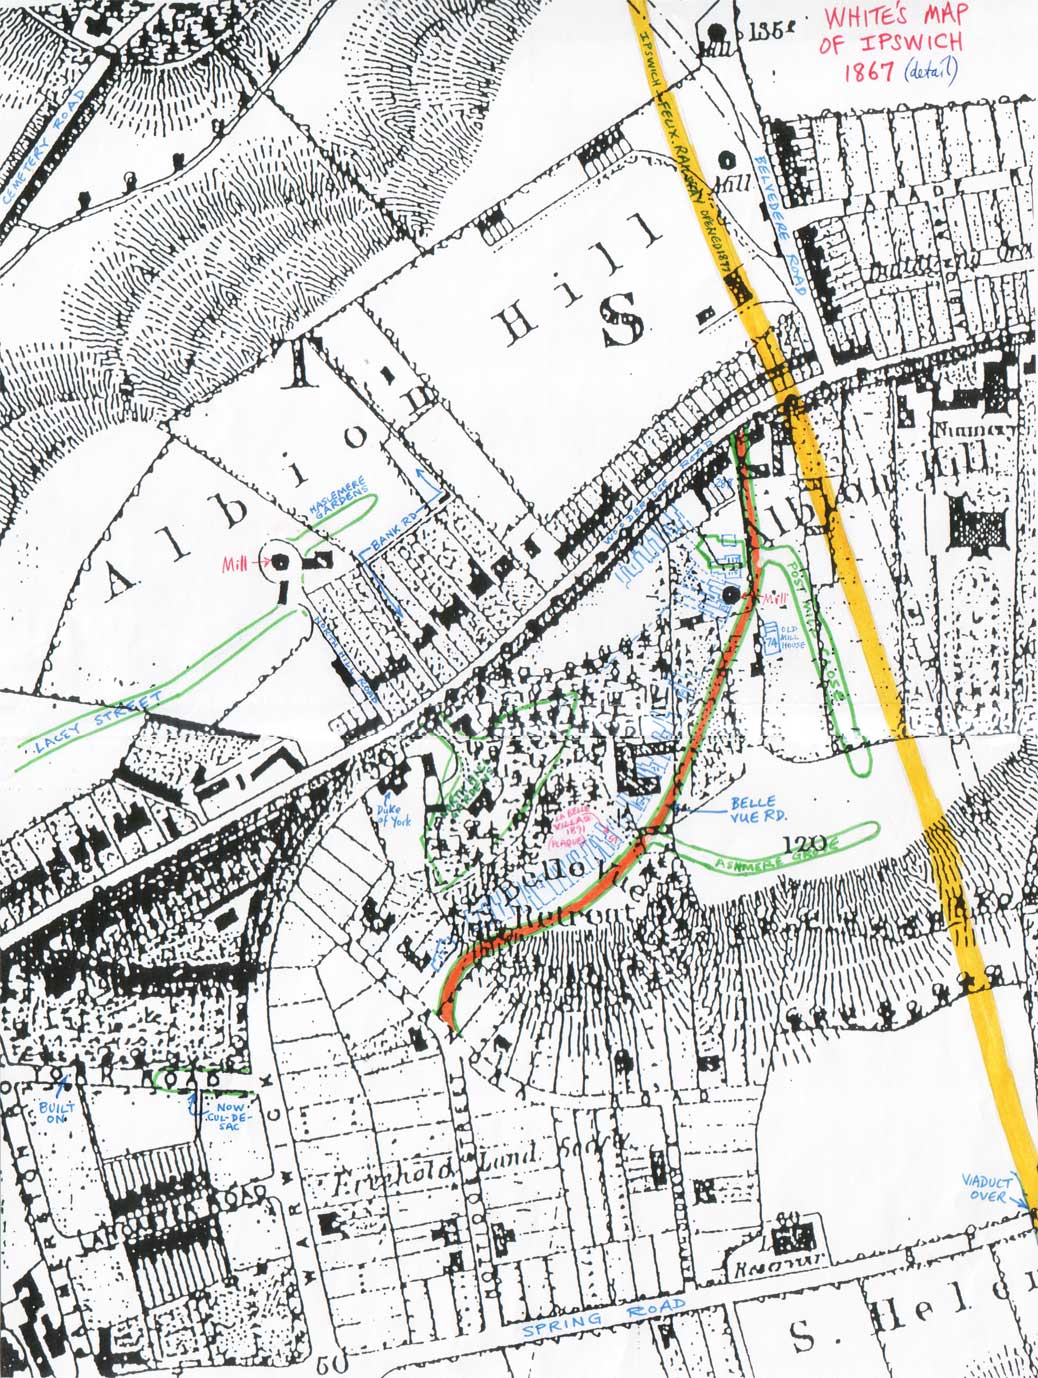 Ipswich Historic Lettering: Russell Villas map 1867